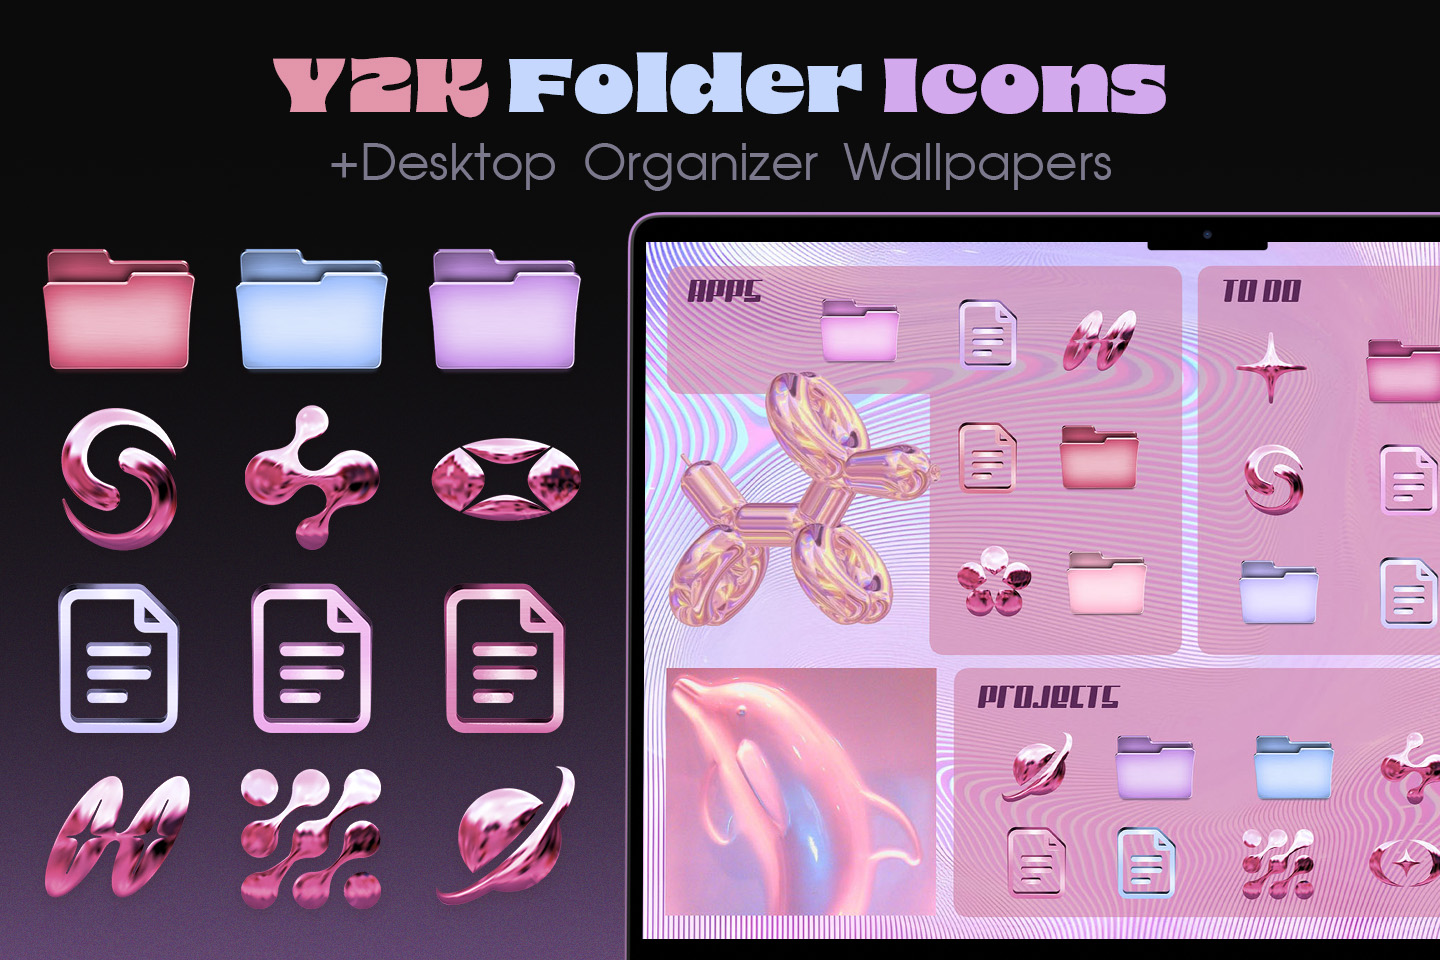 y2k folder icons pack